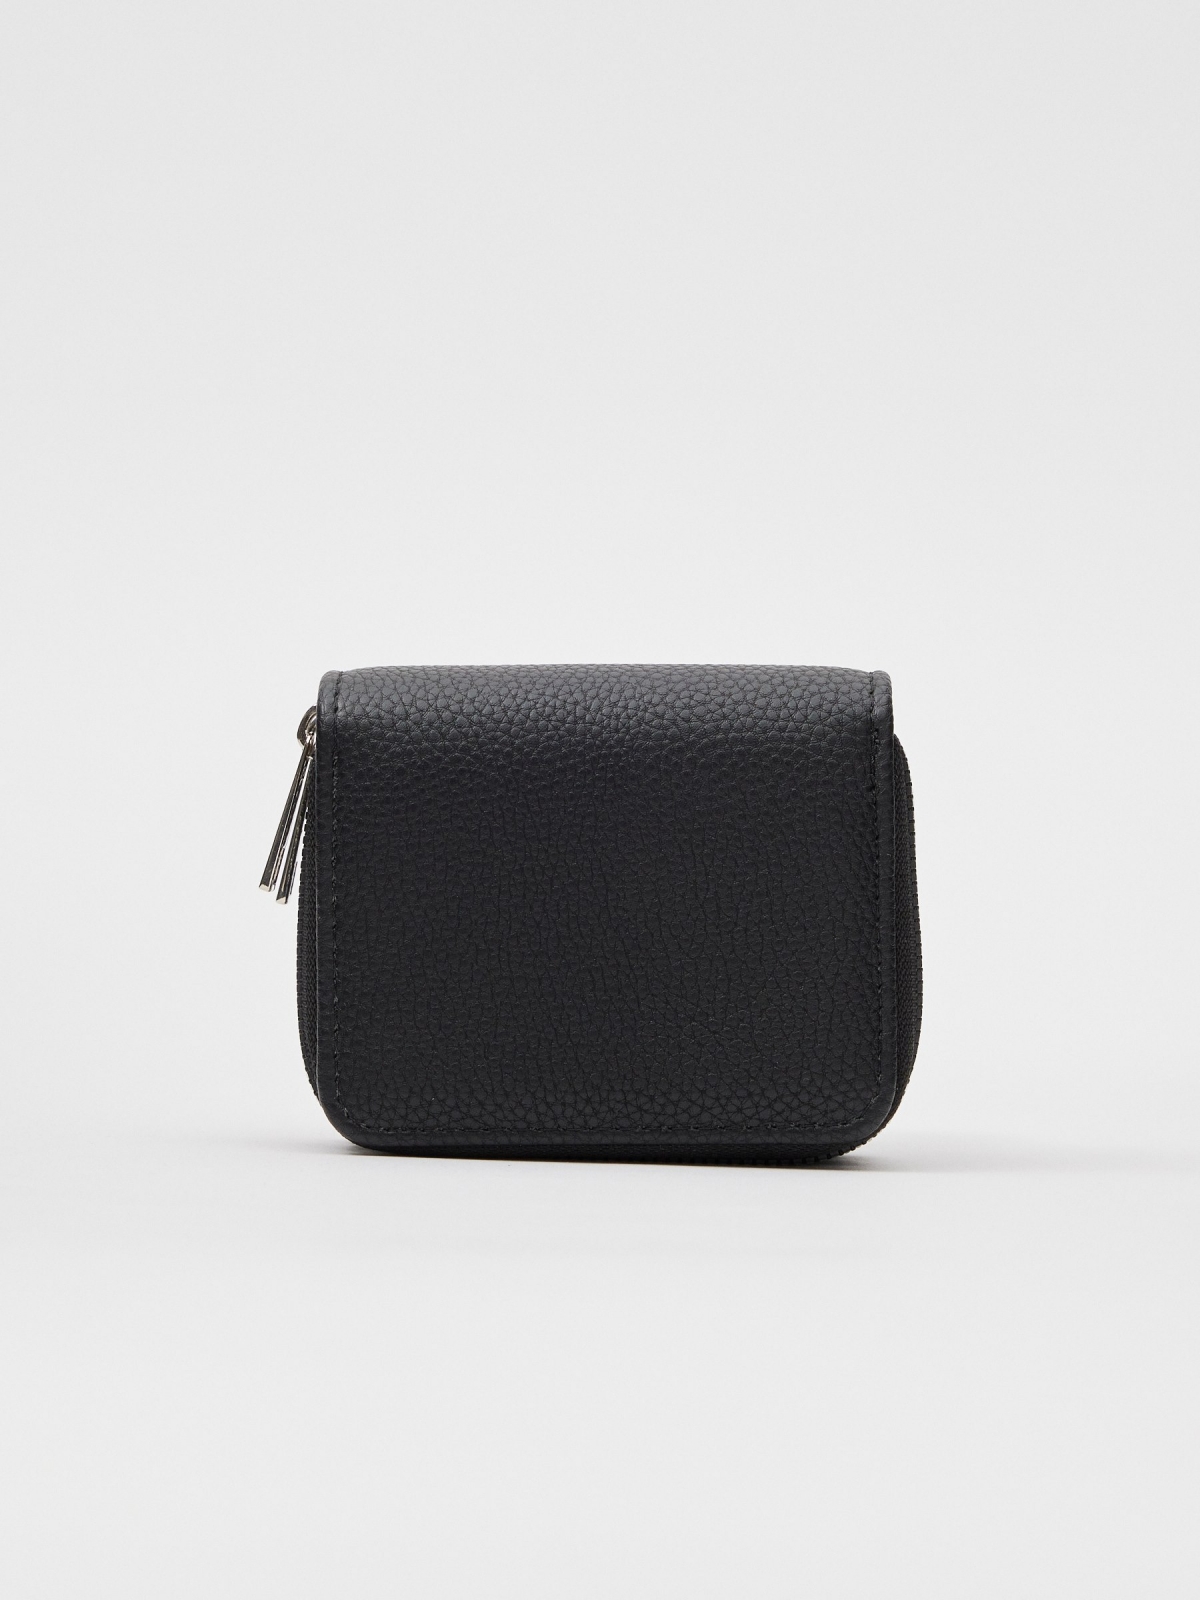 Black textured leatherette wallet